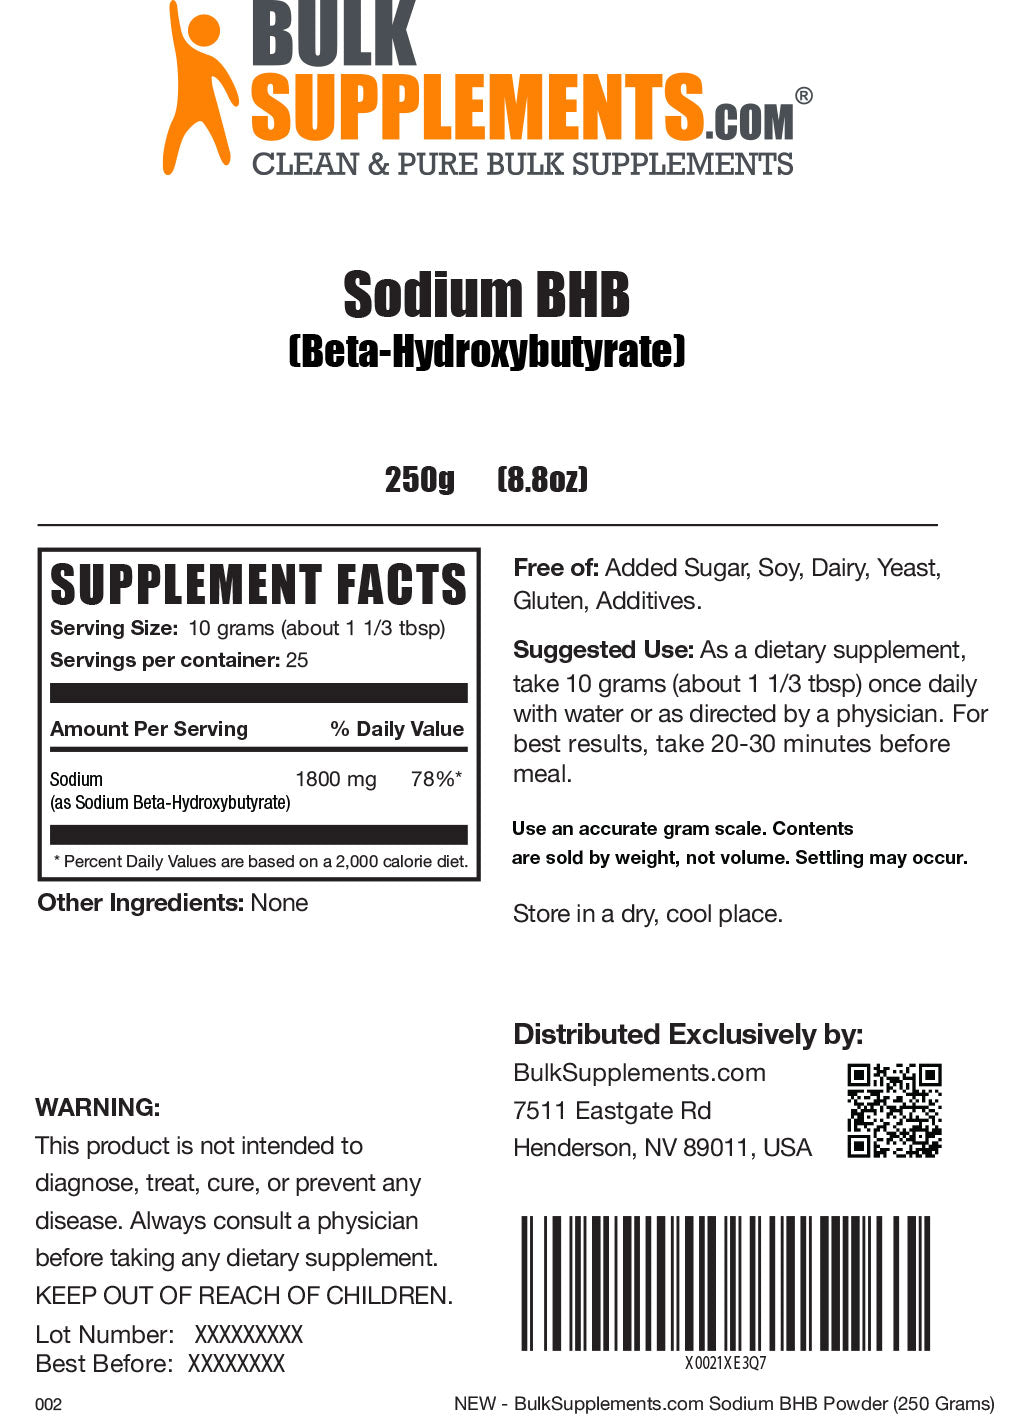 Sodium BHB powder label 250g